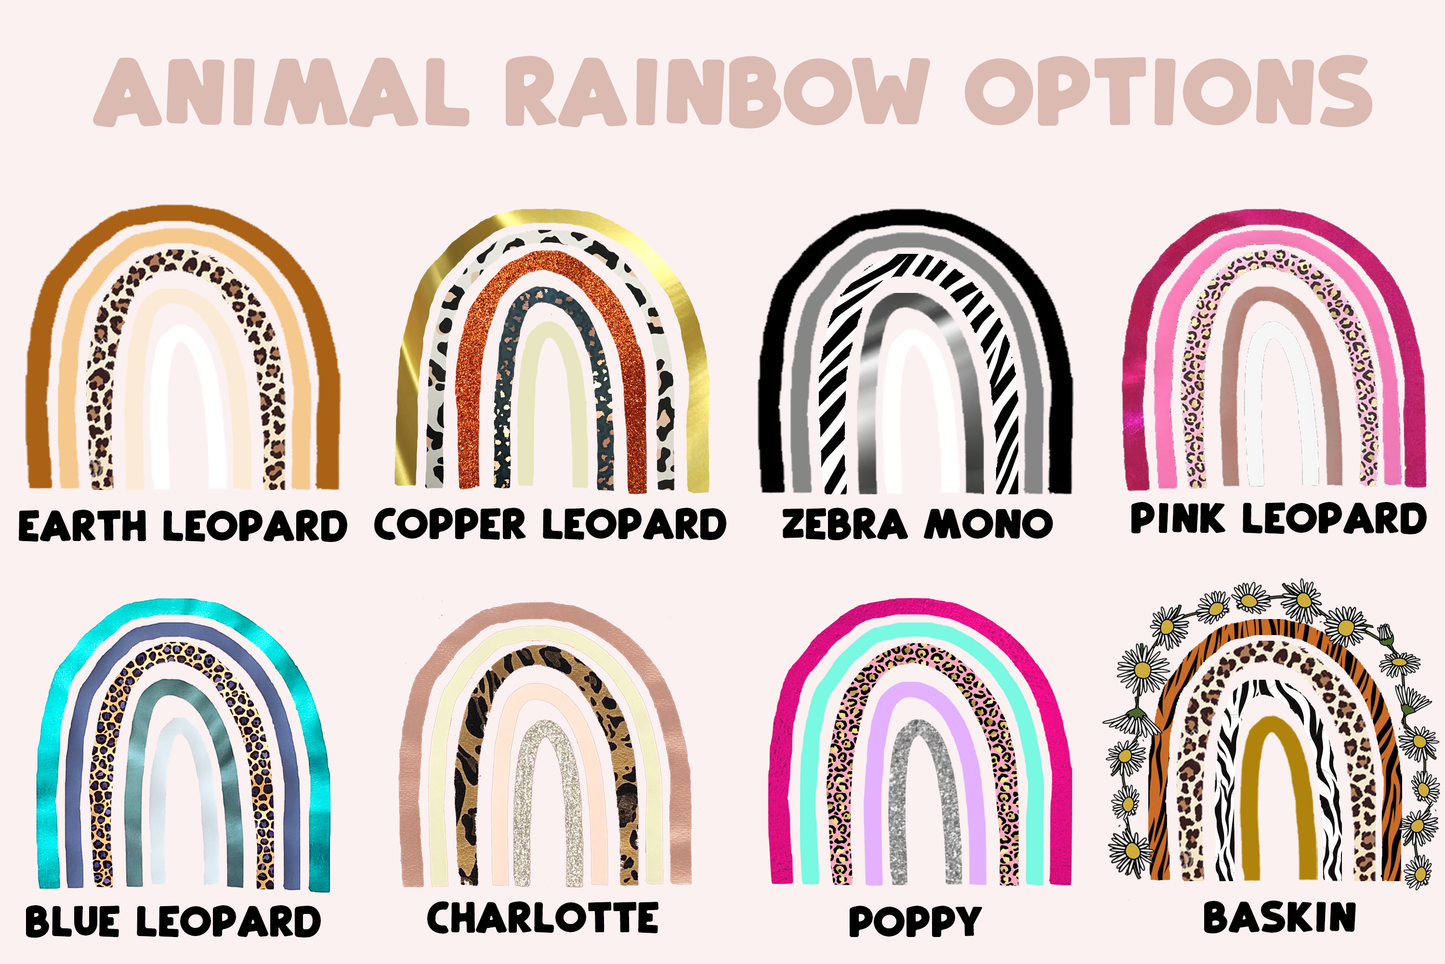 Animal rainbows